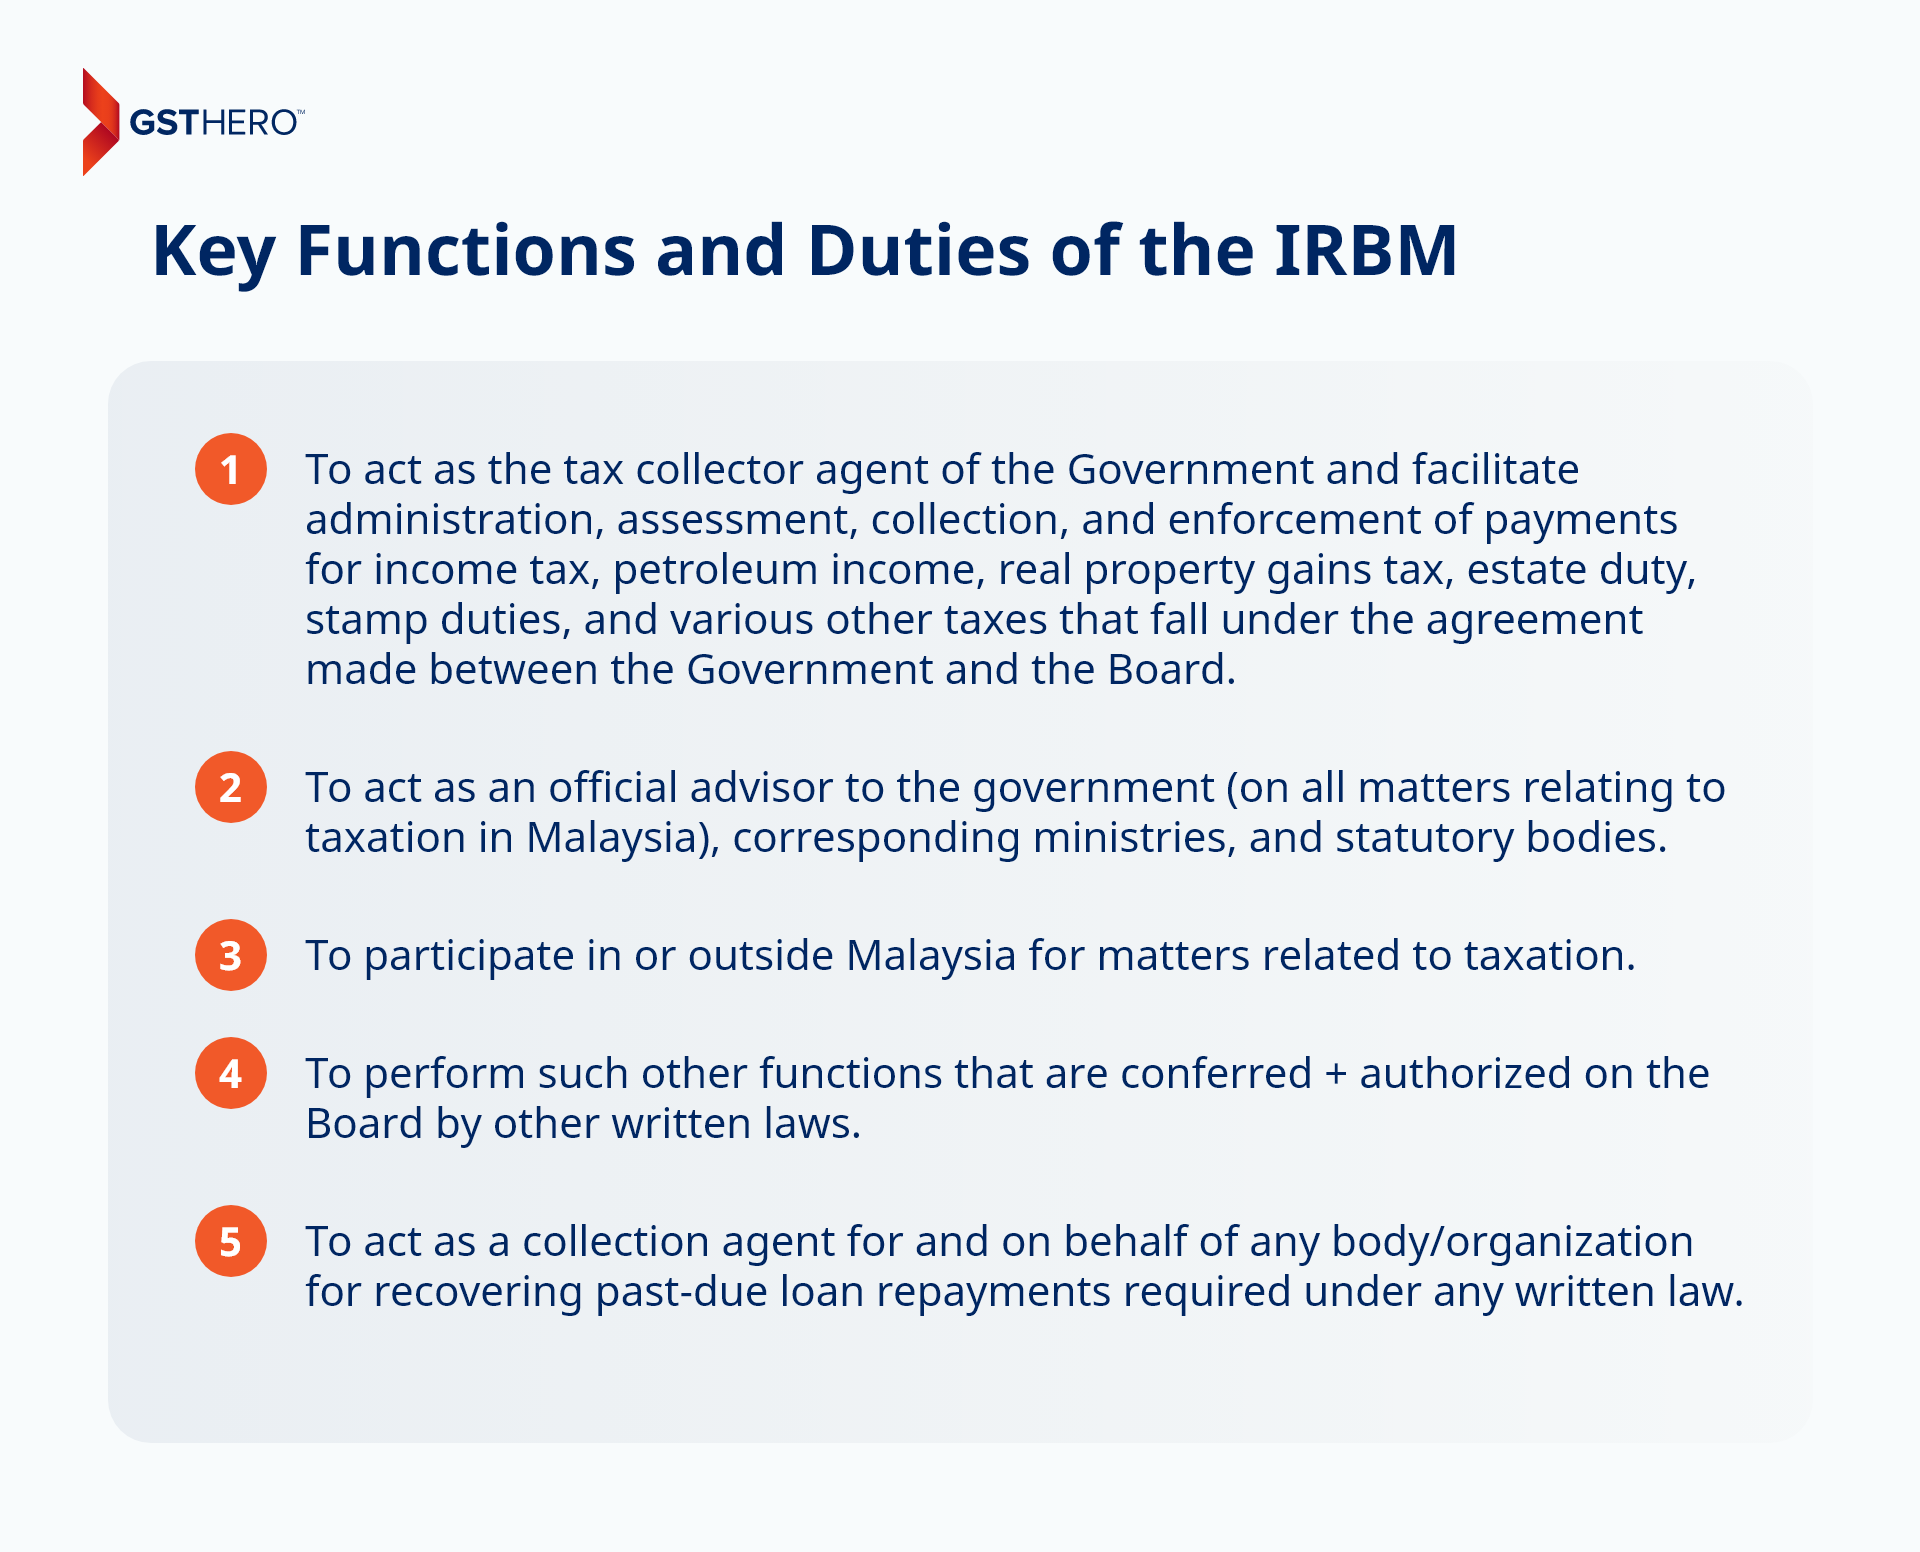 Inland Revenue Board of Malaysia duties